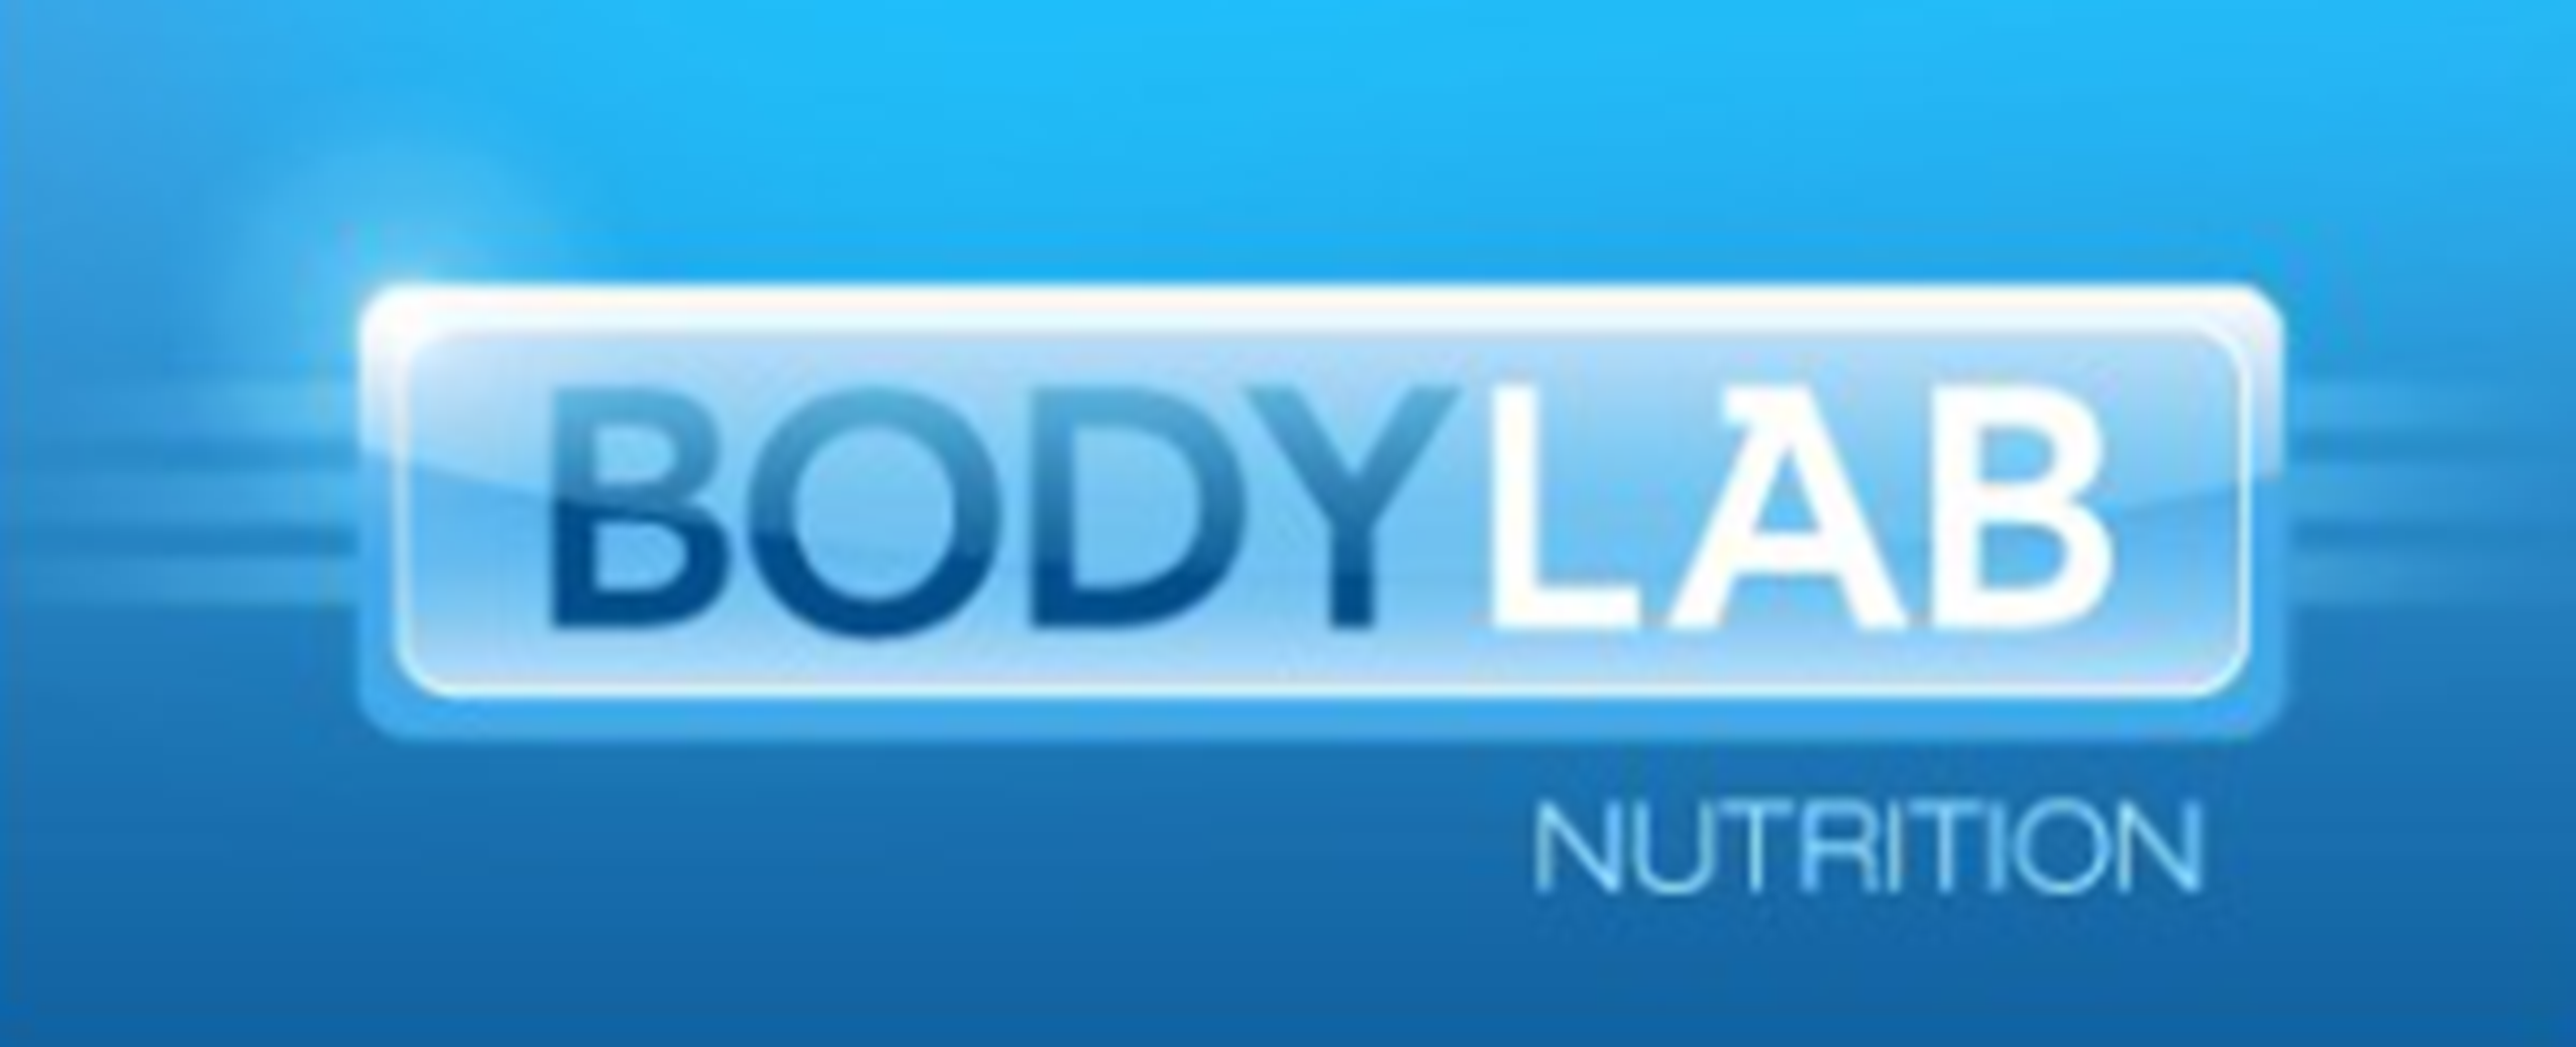 bodylab-logo-300x122